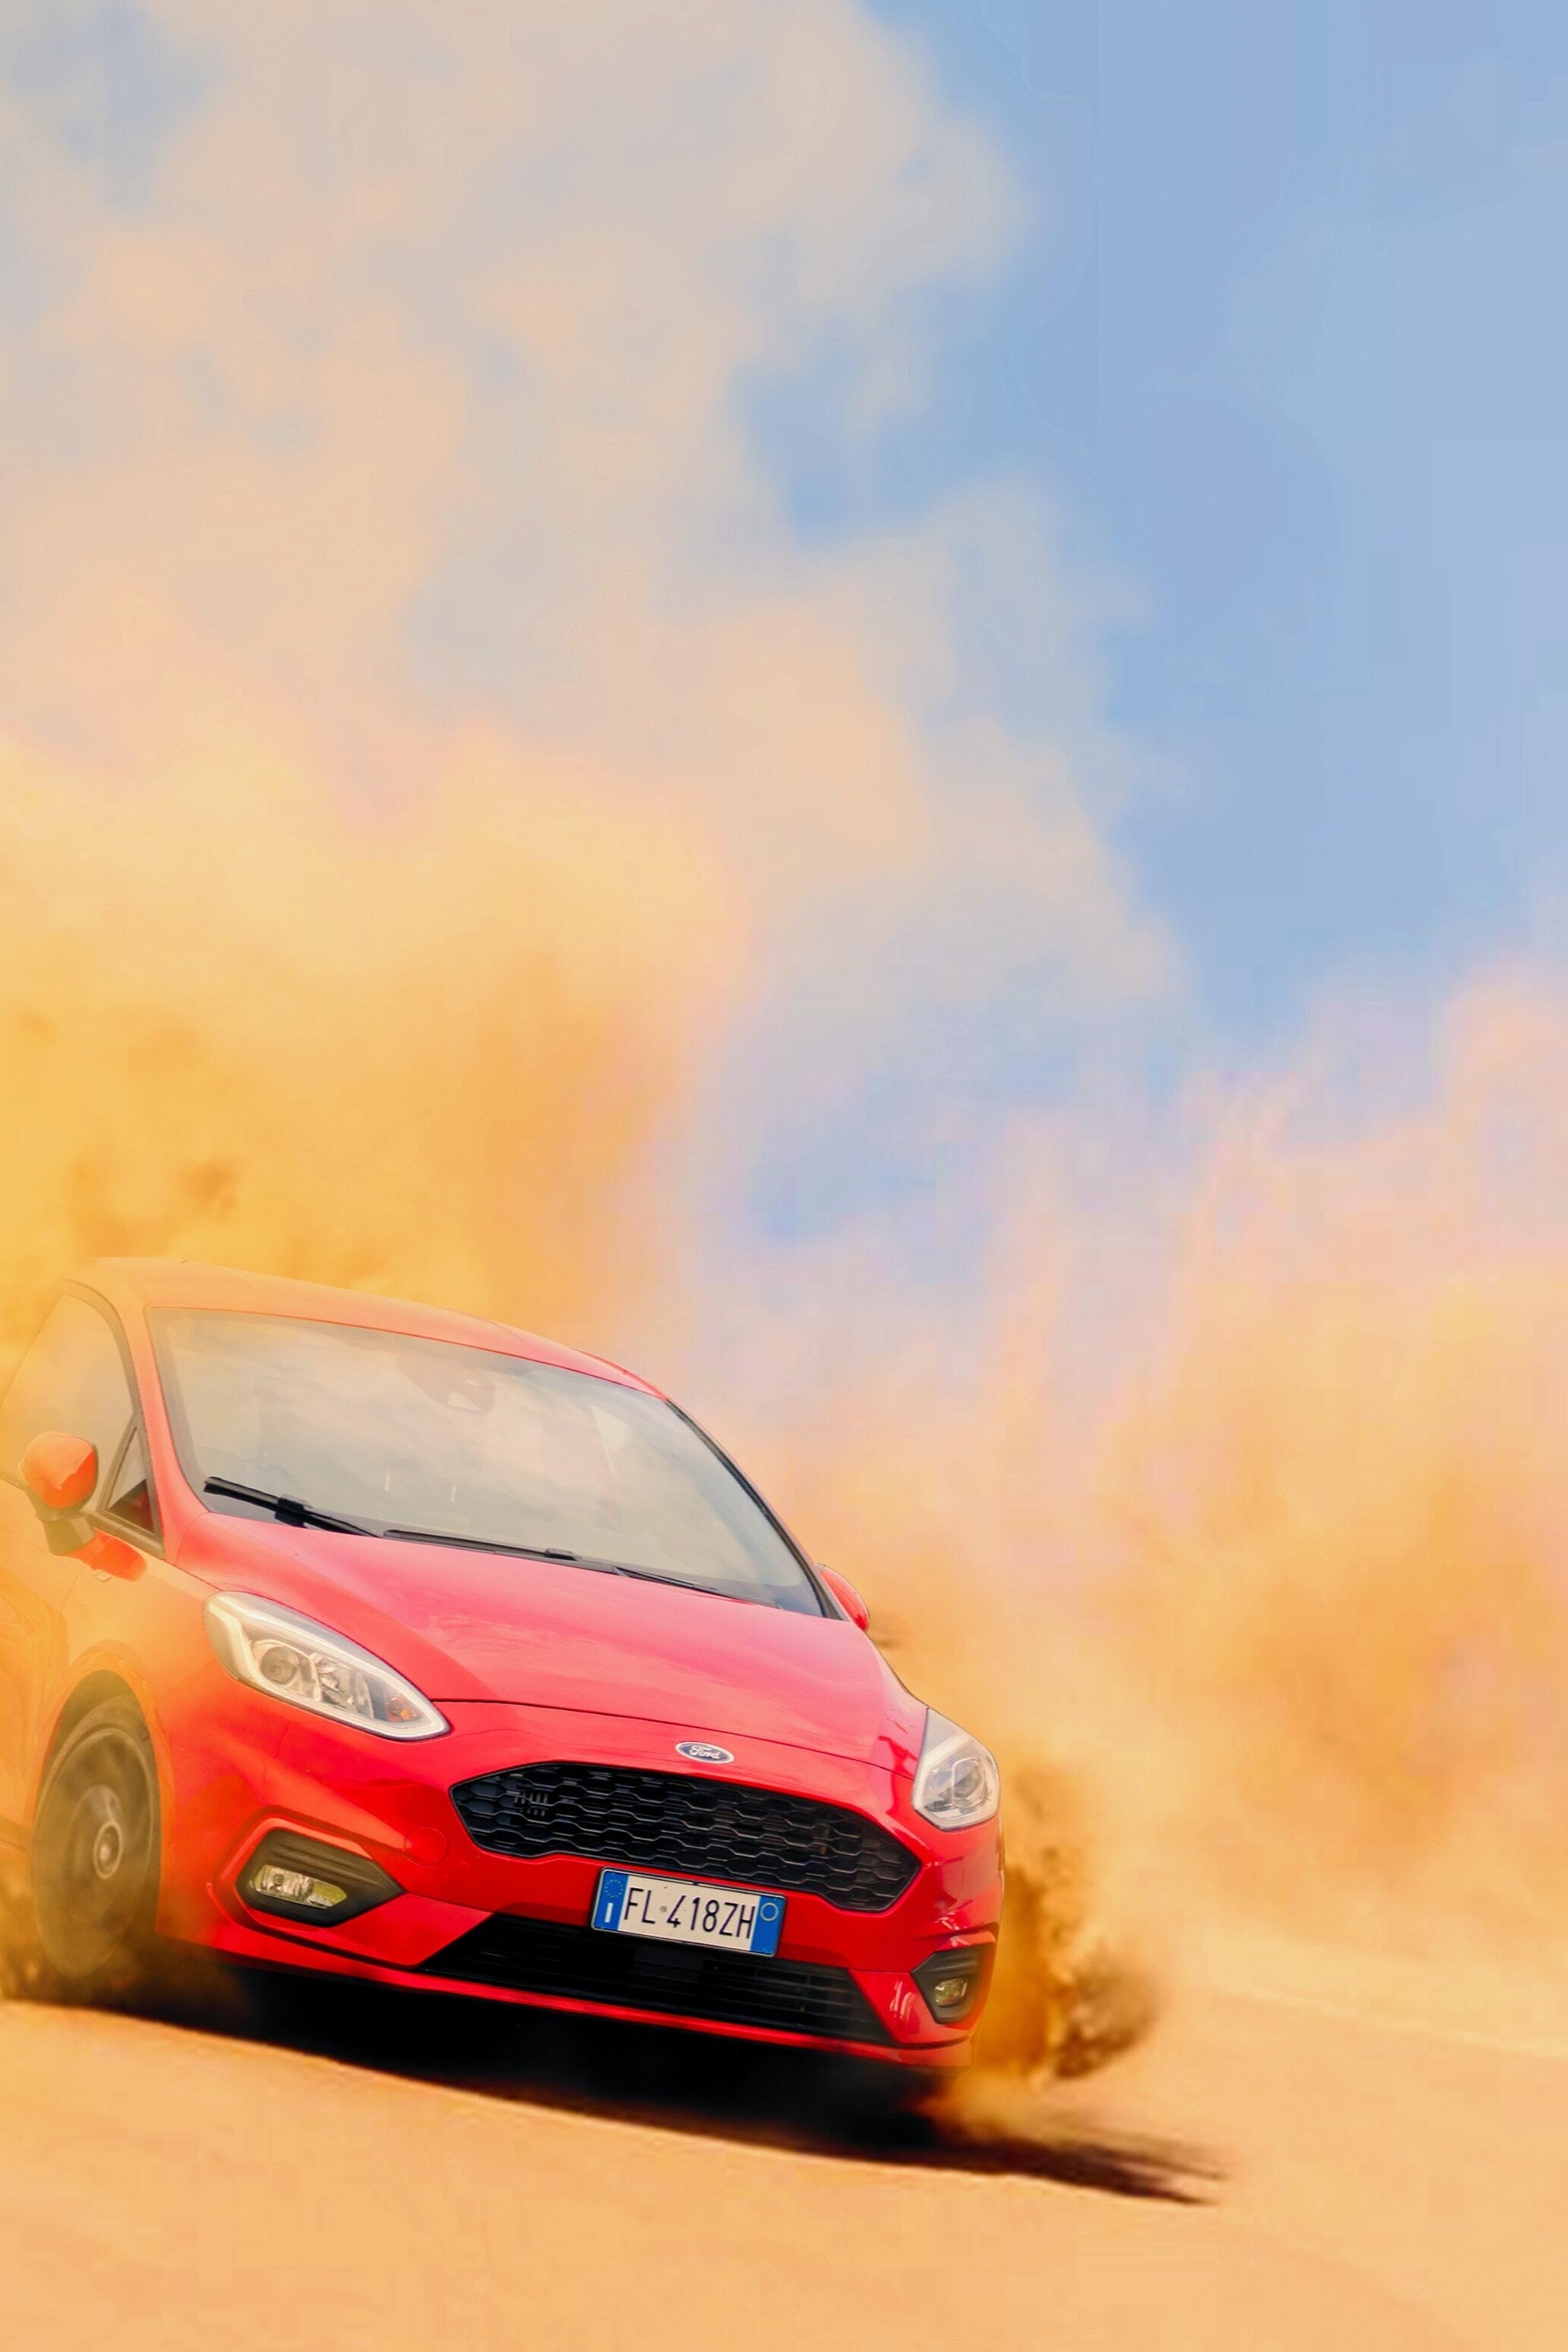 Image: Ford, car, sand, dust, drift, axle boxes, haze